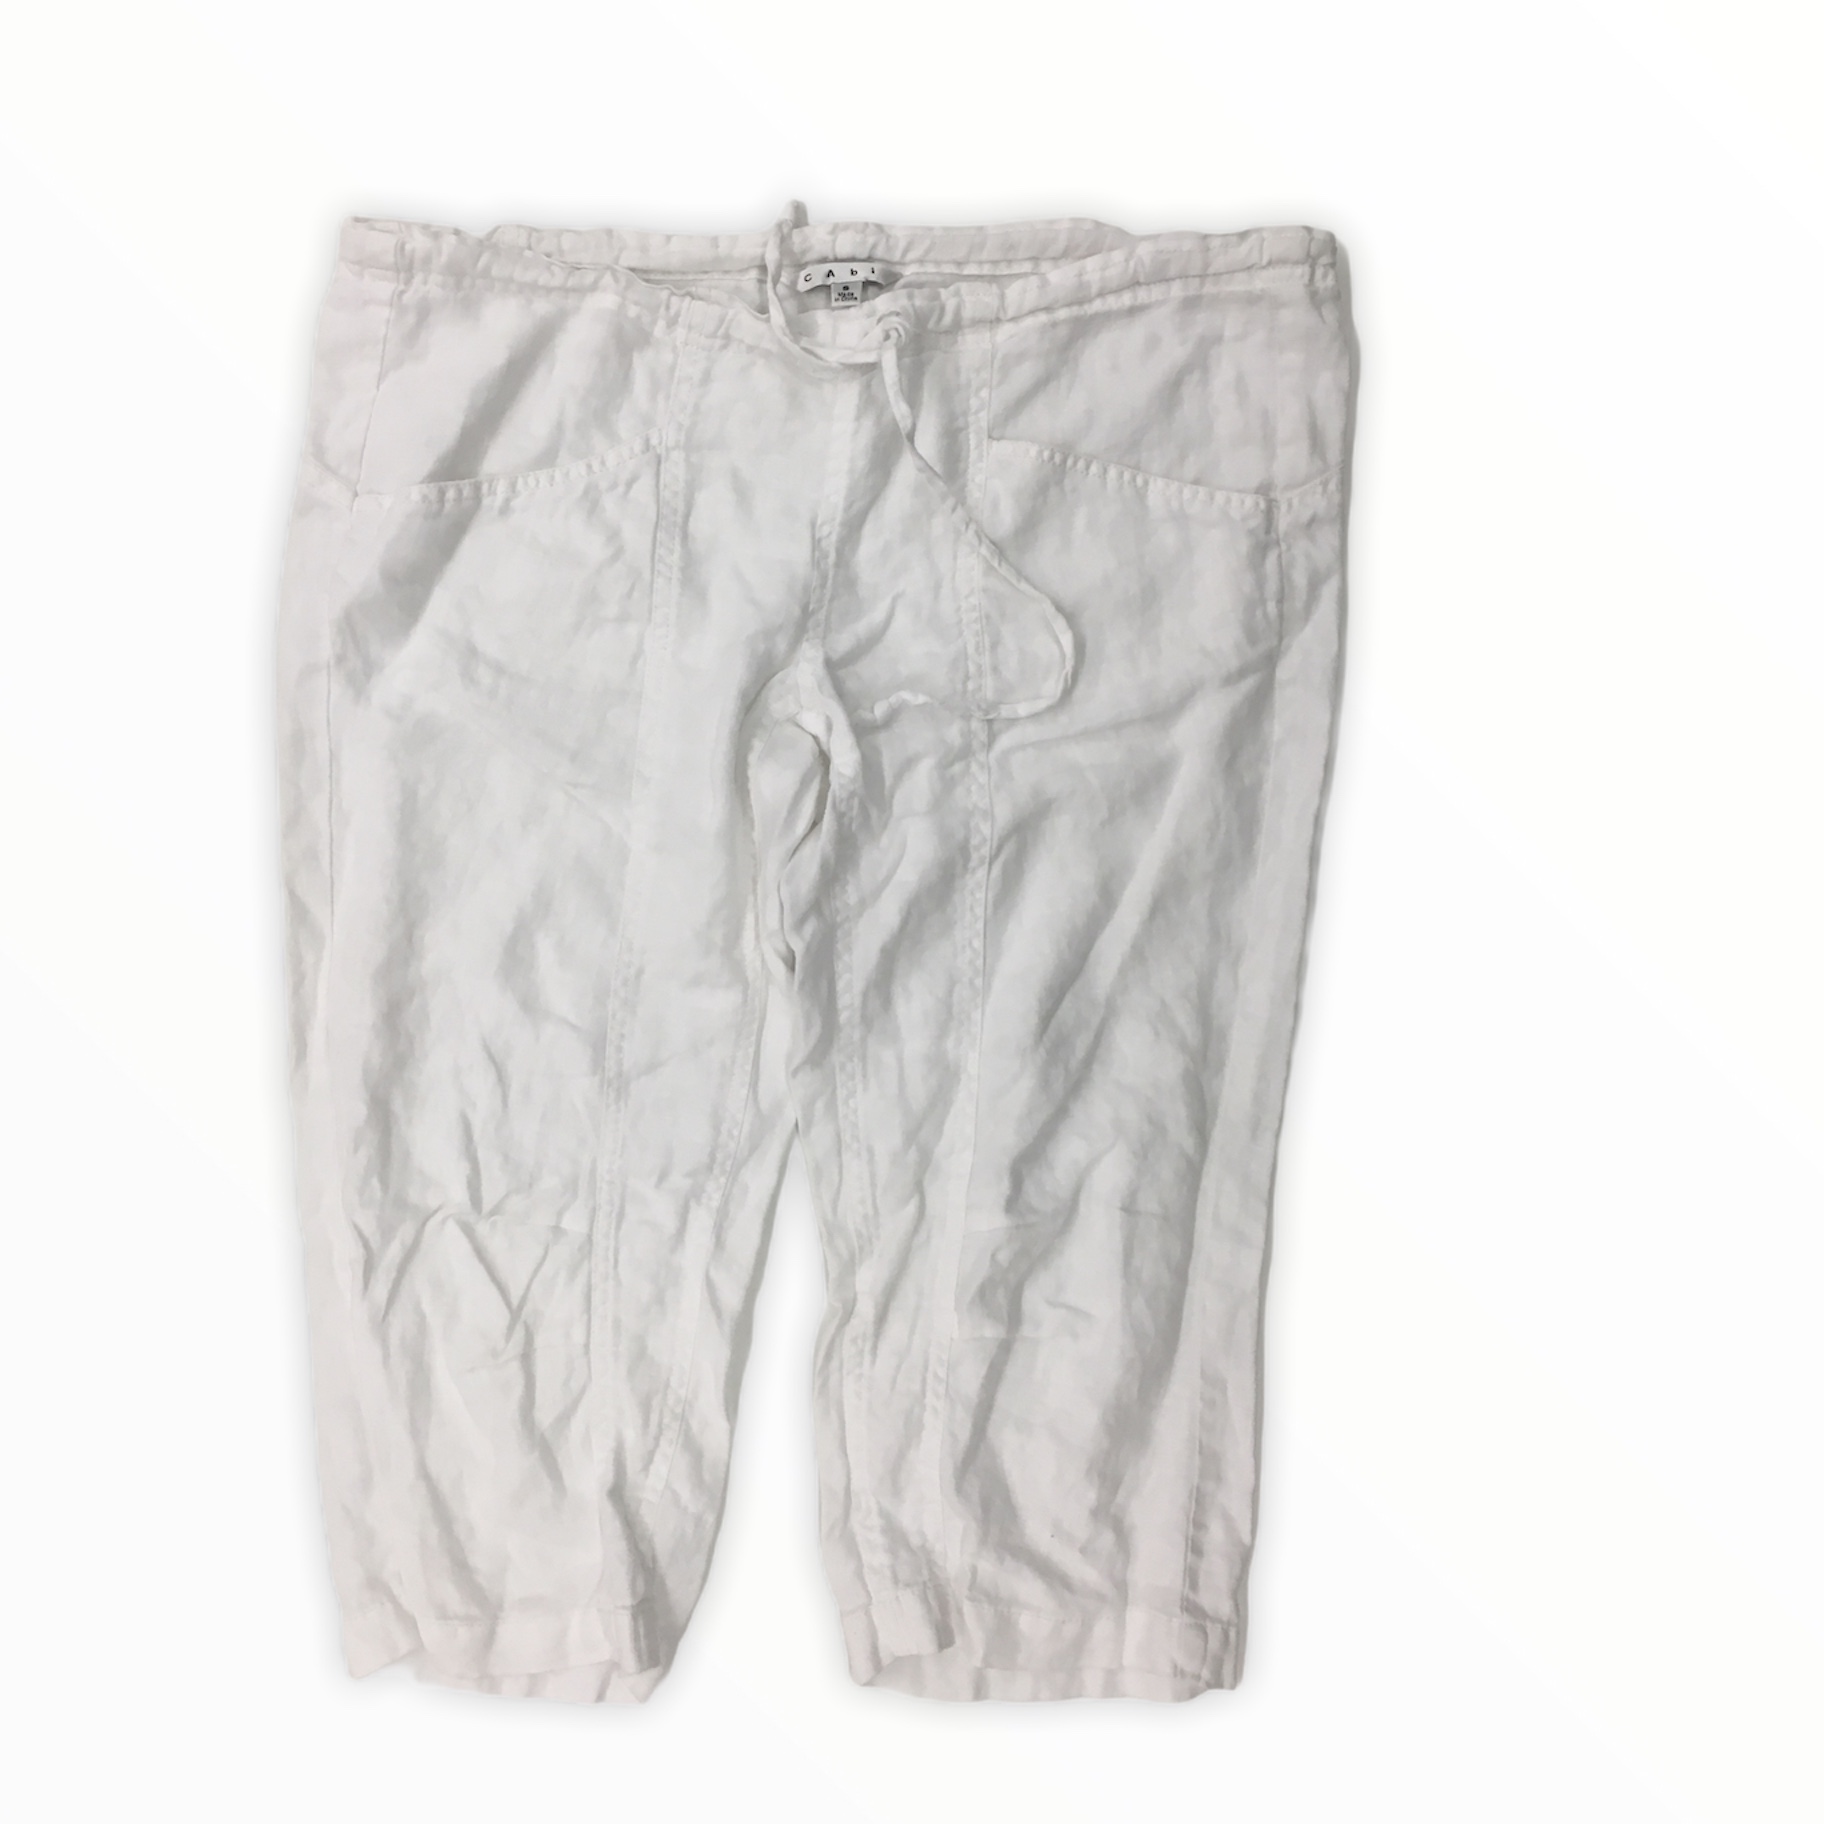 Danskin Now Grey & Pink Athletic Pants Size S (4-6) Juniors